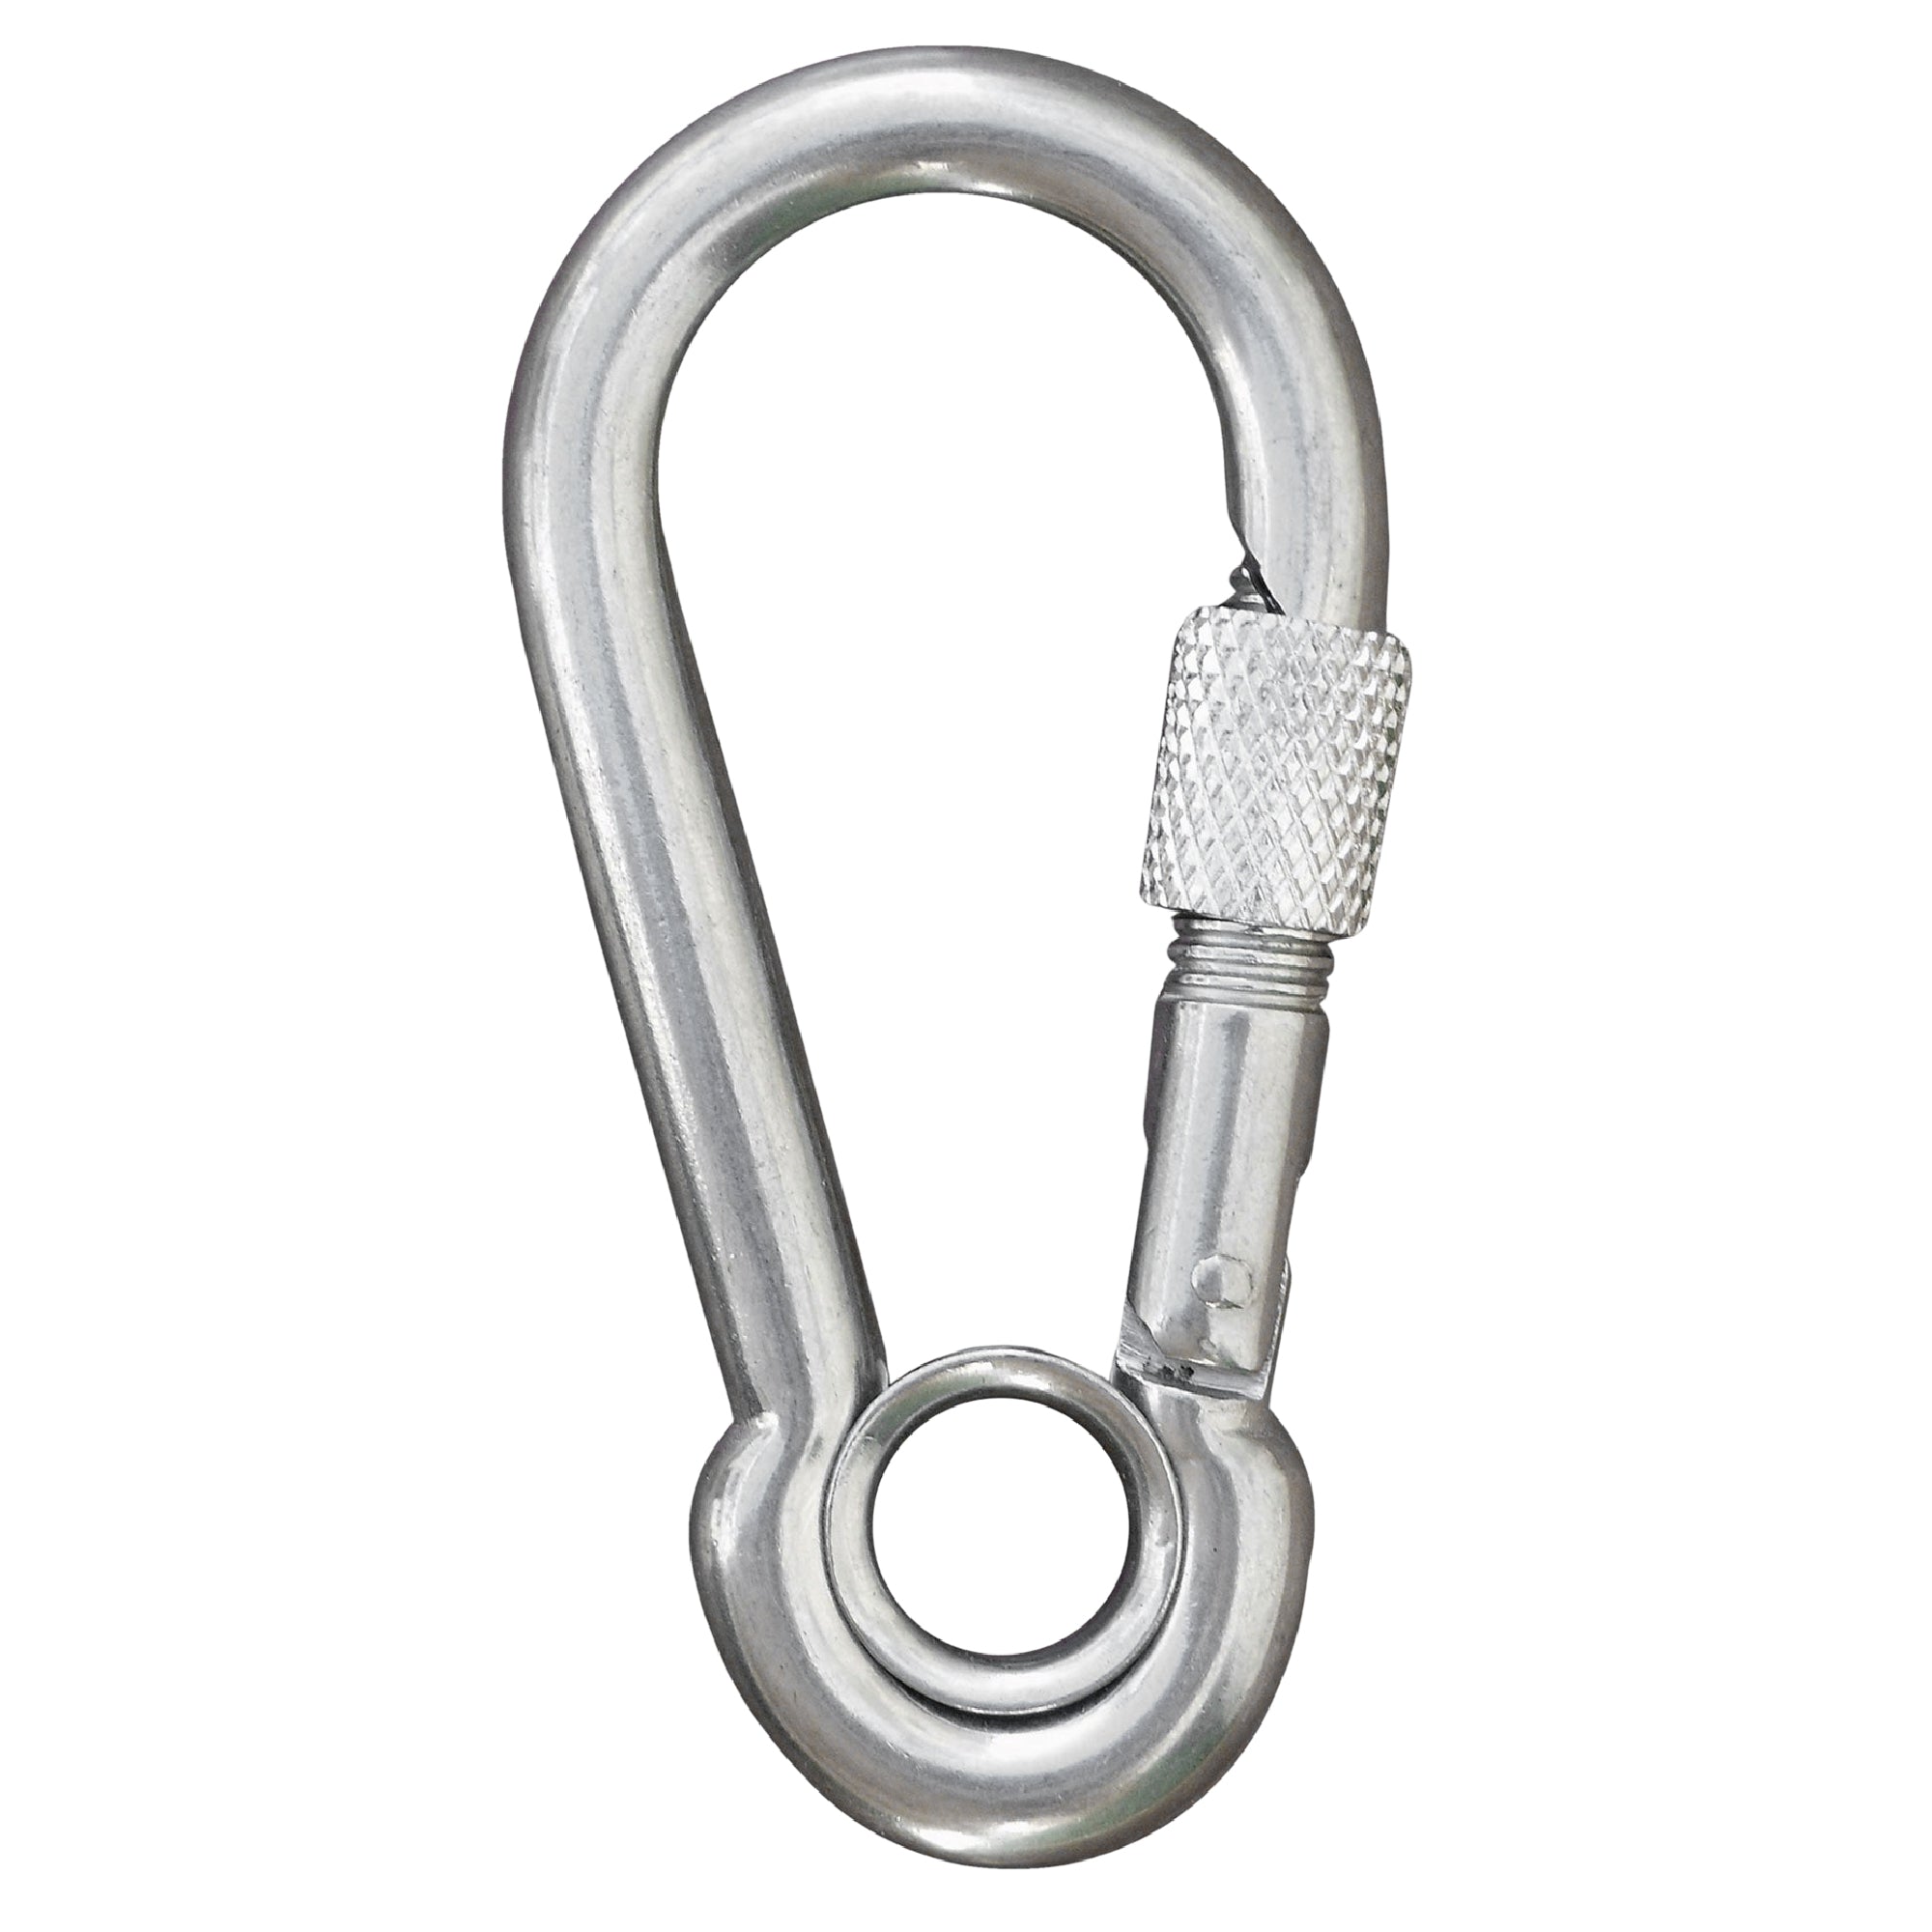 Snap Hook with Thimble Eye & Barrel Lock, 3-1/8" - FO455